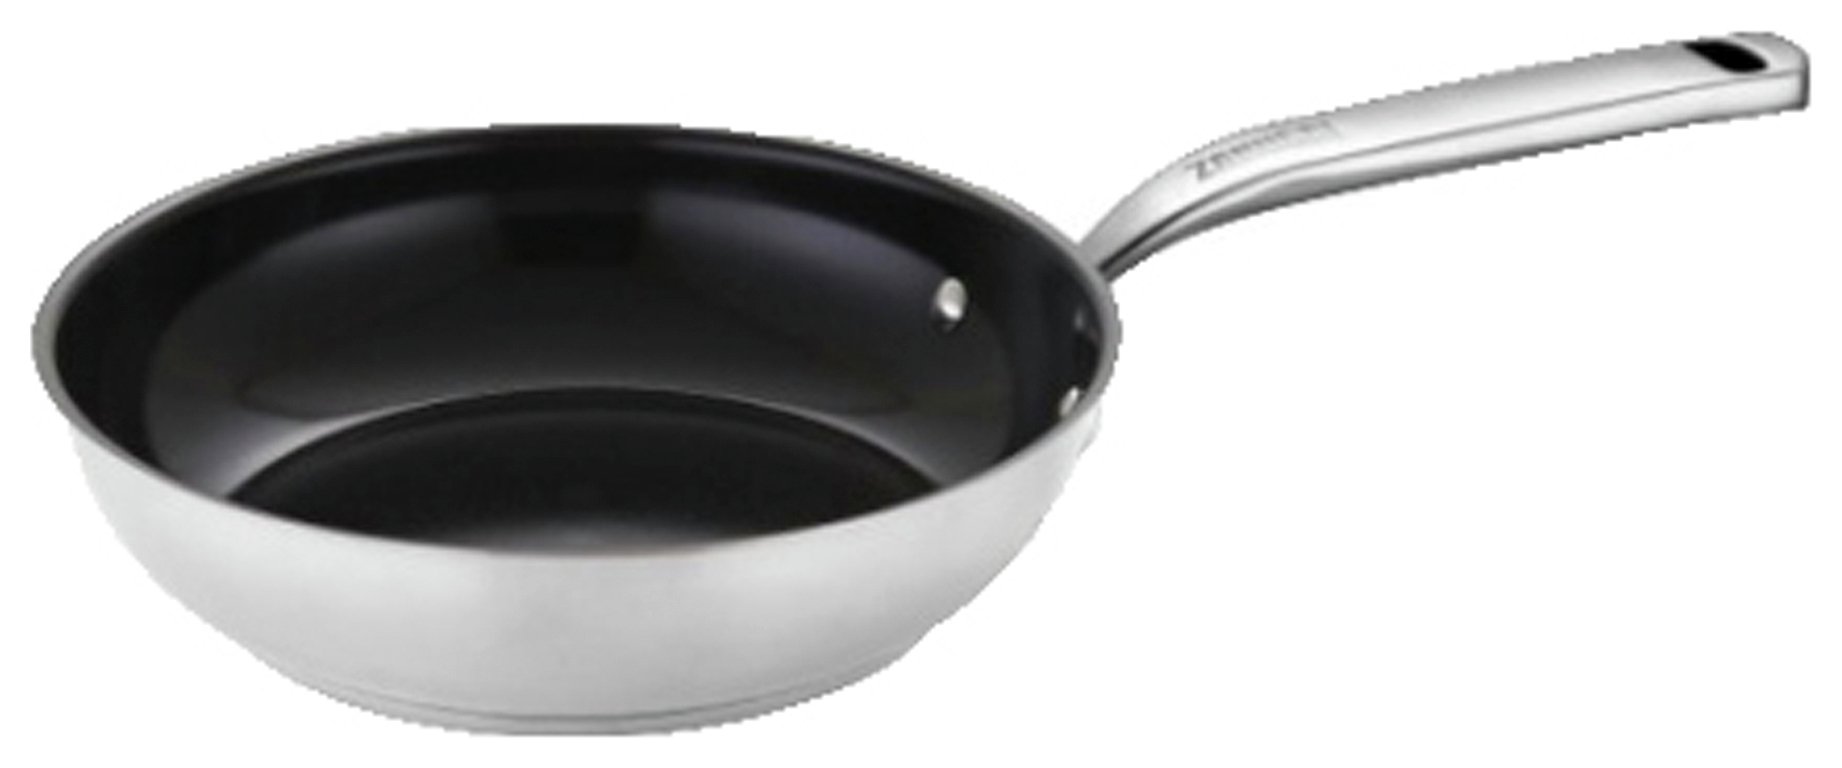 Zanussi Positano 24cm Stainless Steel Frying Pan